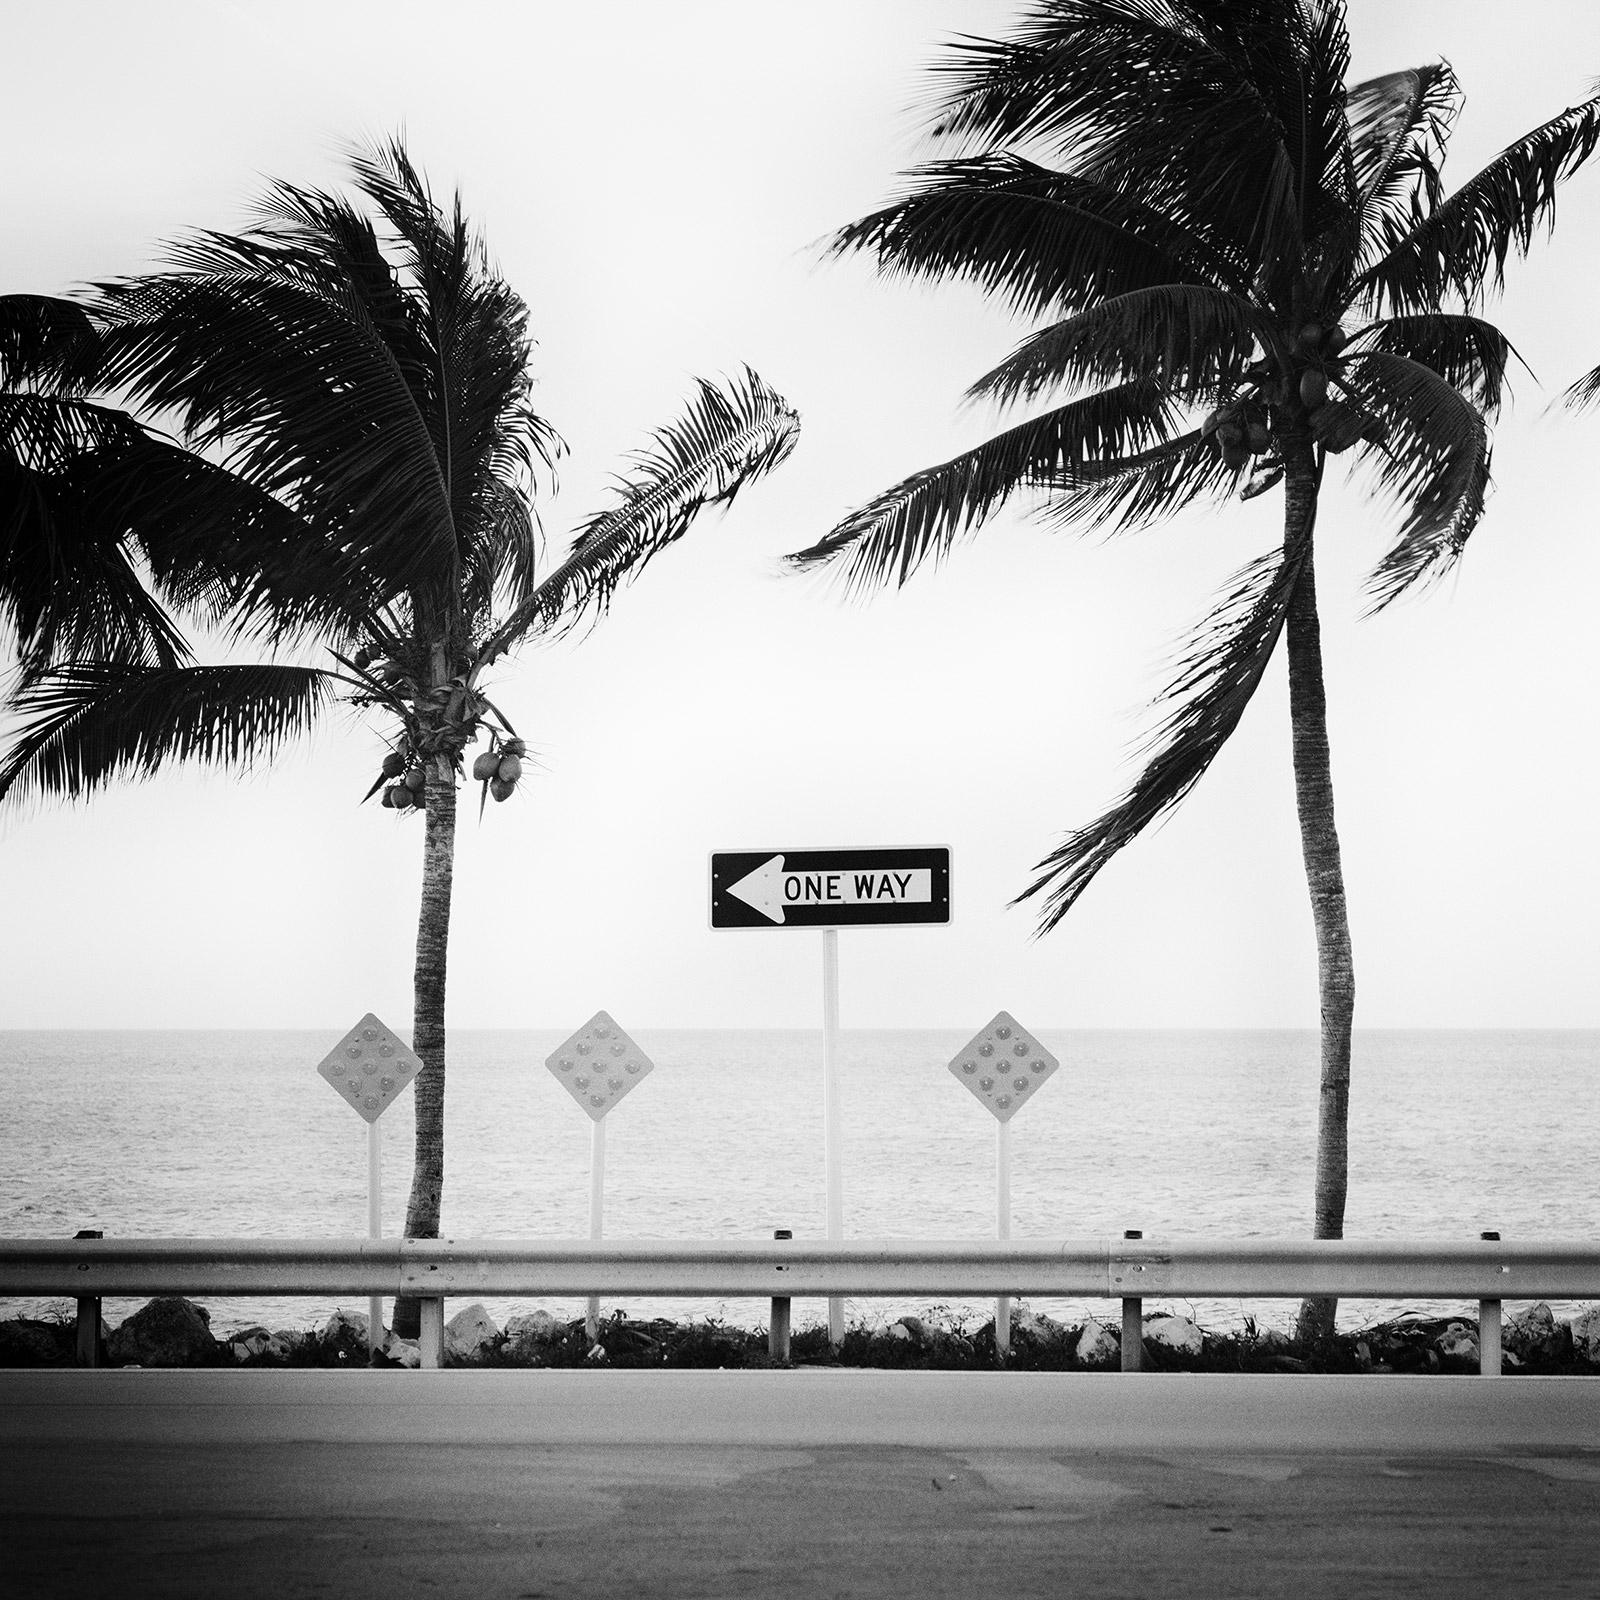 Gerald Berghammer Landscape Photograph - ONE WAY, Miami Beach, Florida, USA, black & white landscape photography print